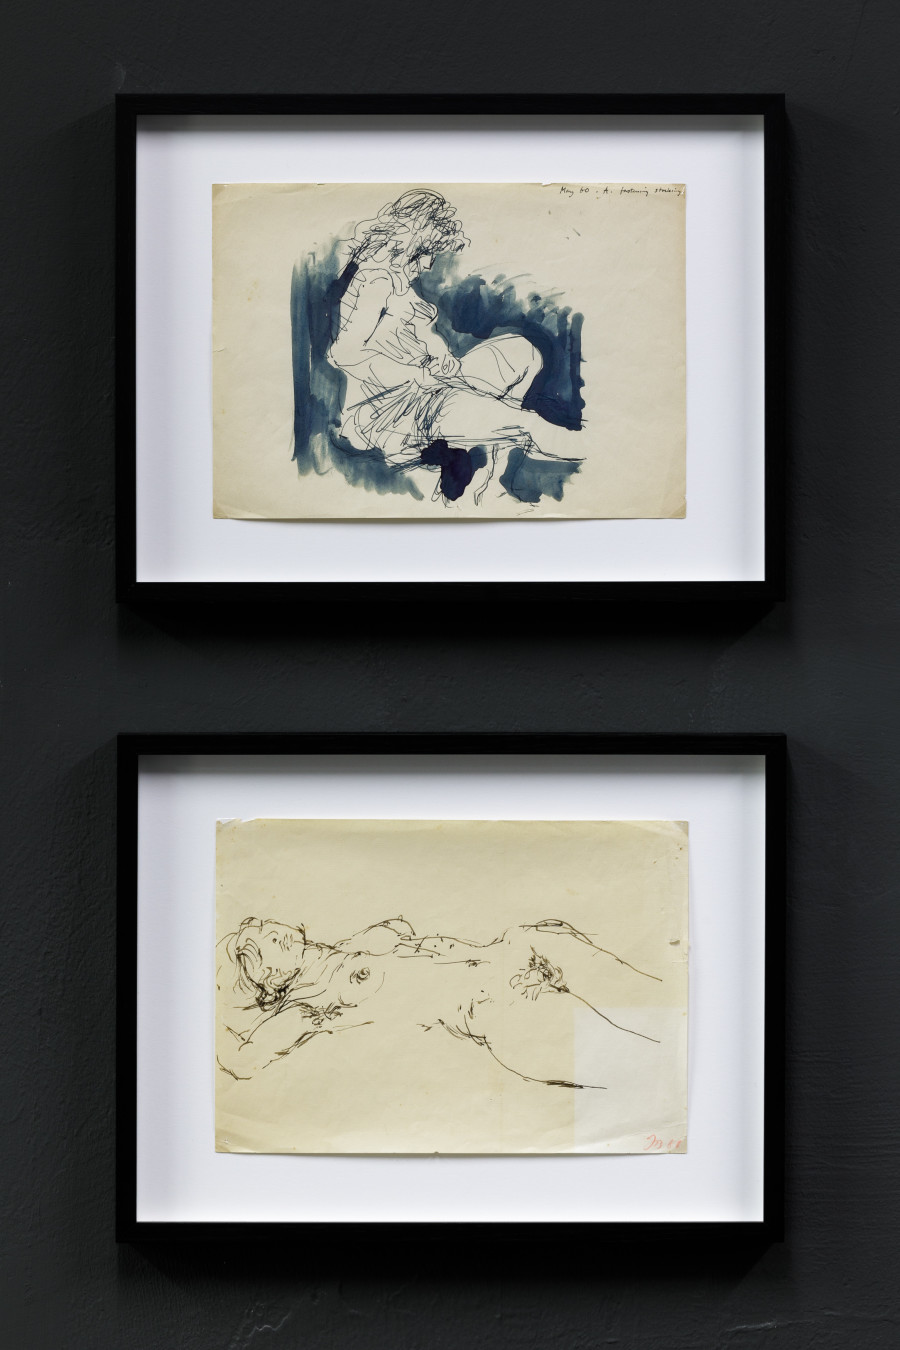 (top) John Berger, A. fastening stocking, 1956, ink on paper, 21 x 29.7 cm (bottom) John Berger, Femme nue allongée, n.d., ink on paper, 21 x 29.5 cm Photo: Kilian Bannwart